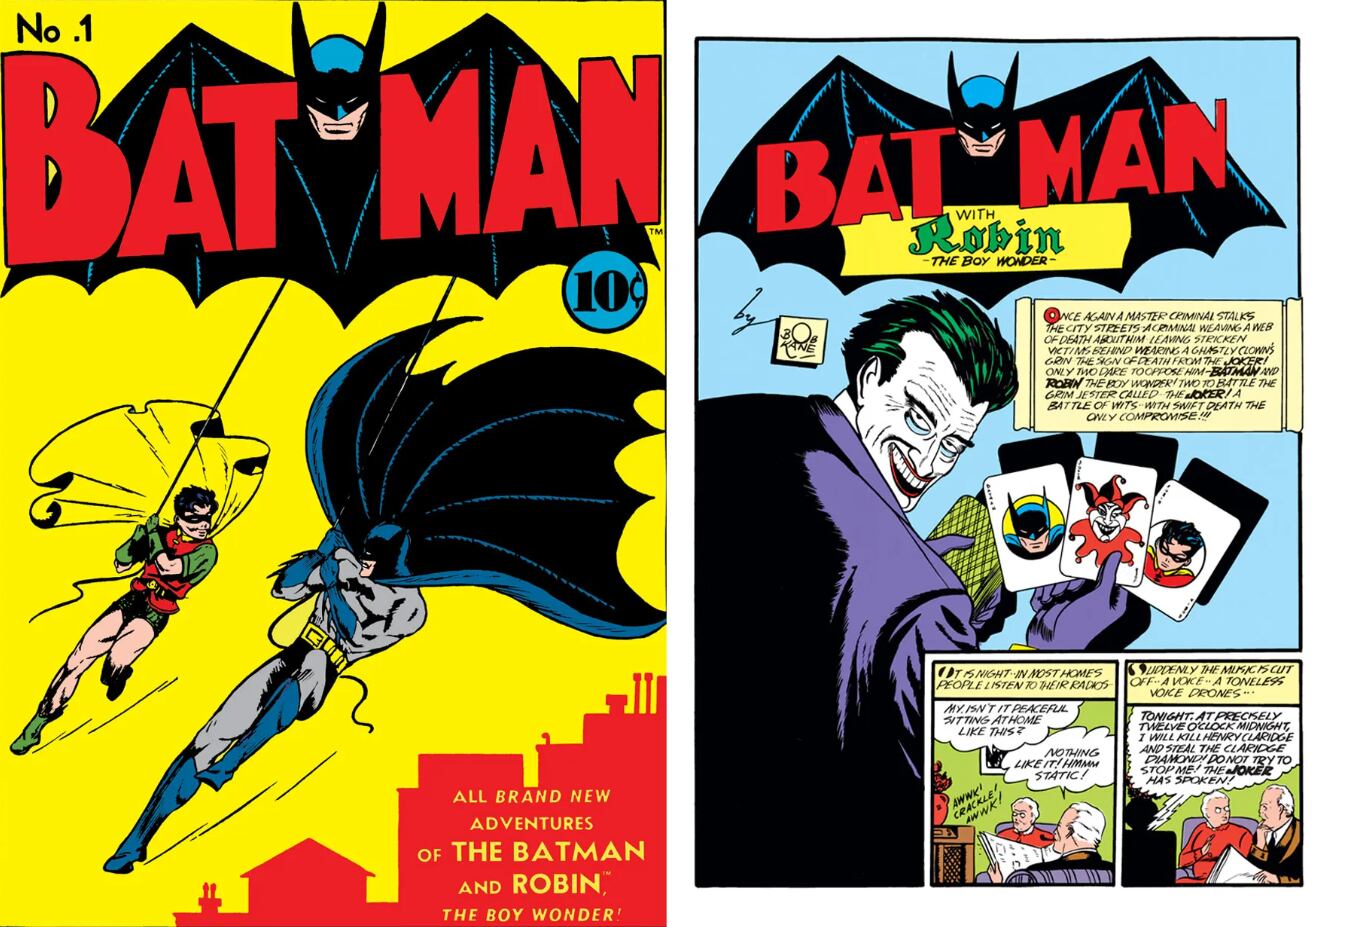 El primer cómic en el que apareció el Joker fue 'Batman #1', como villano del superhéroe Batman.